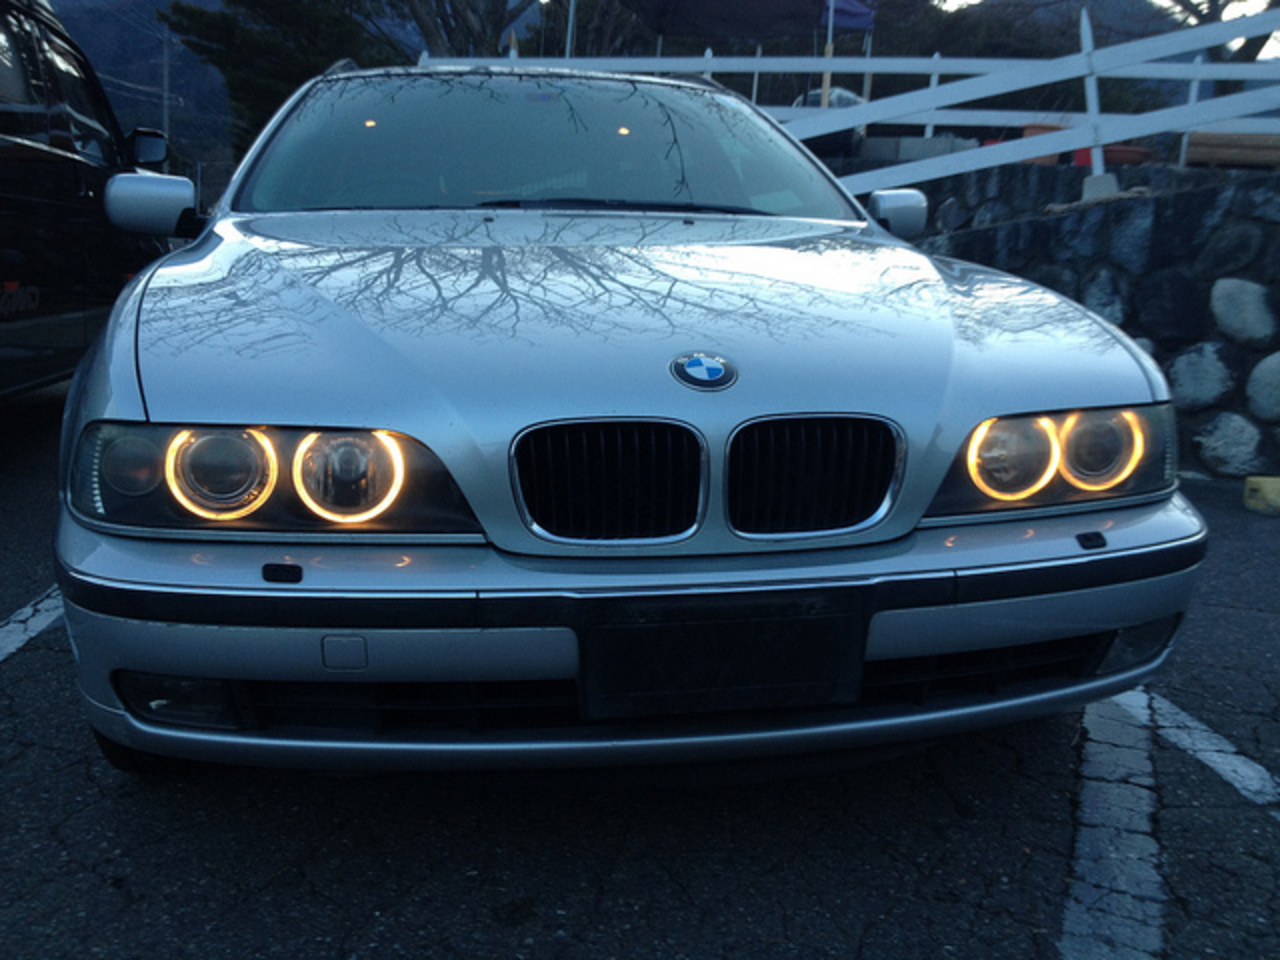 BMW 530 2000 | Flickr - Photo Sharing!